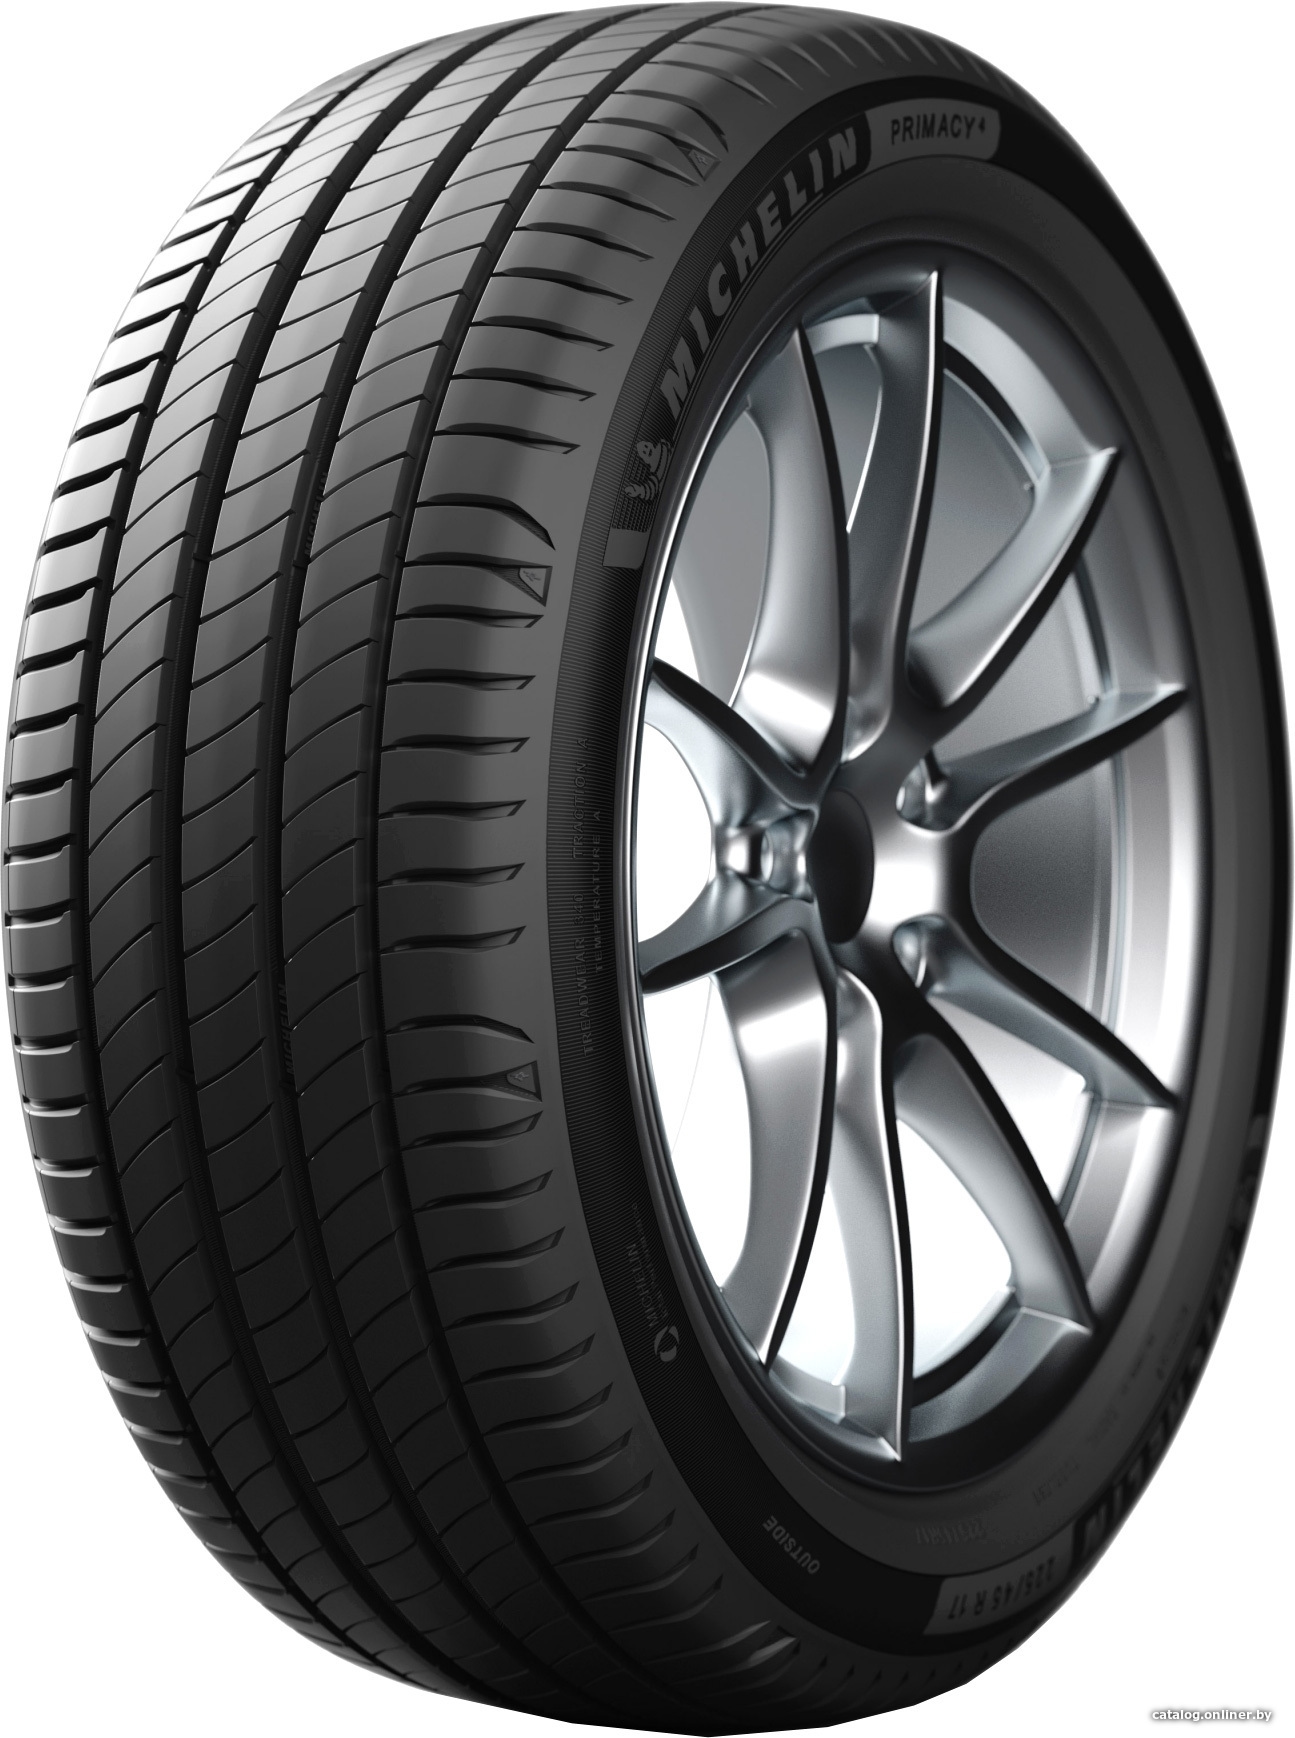 Автомобильные шины Michelin Primacy 4 195/65R15 91H